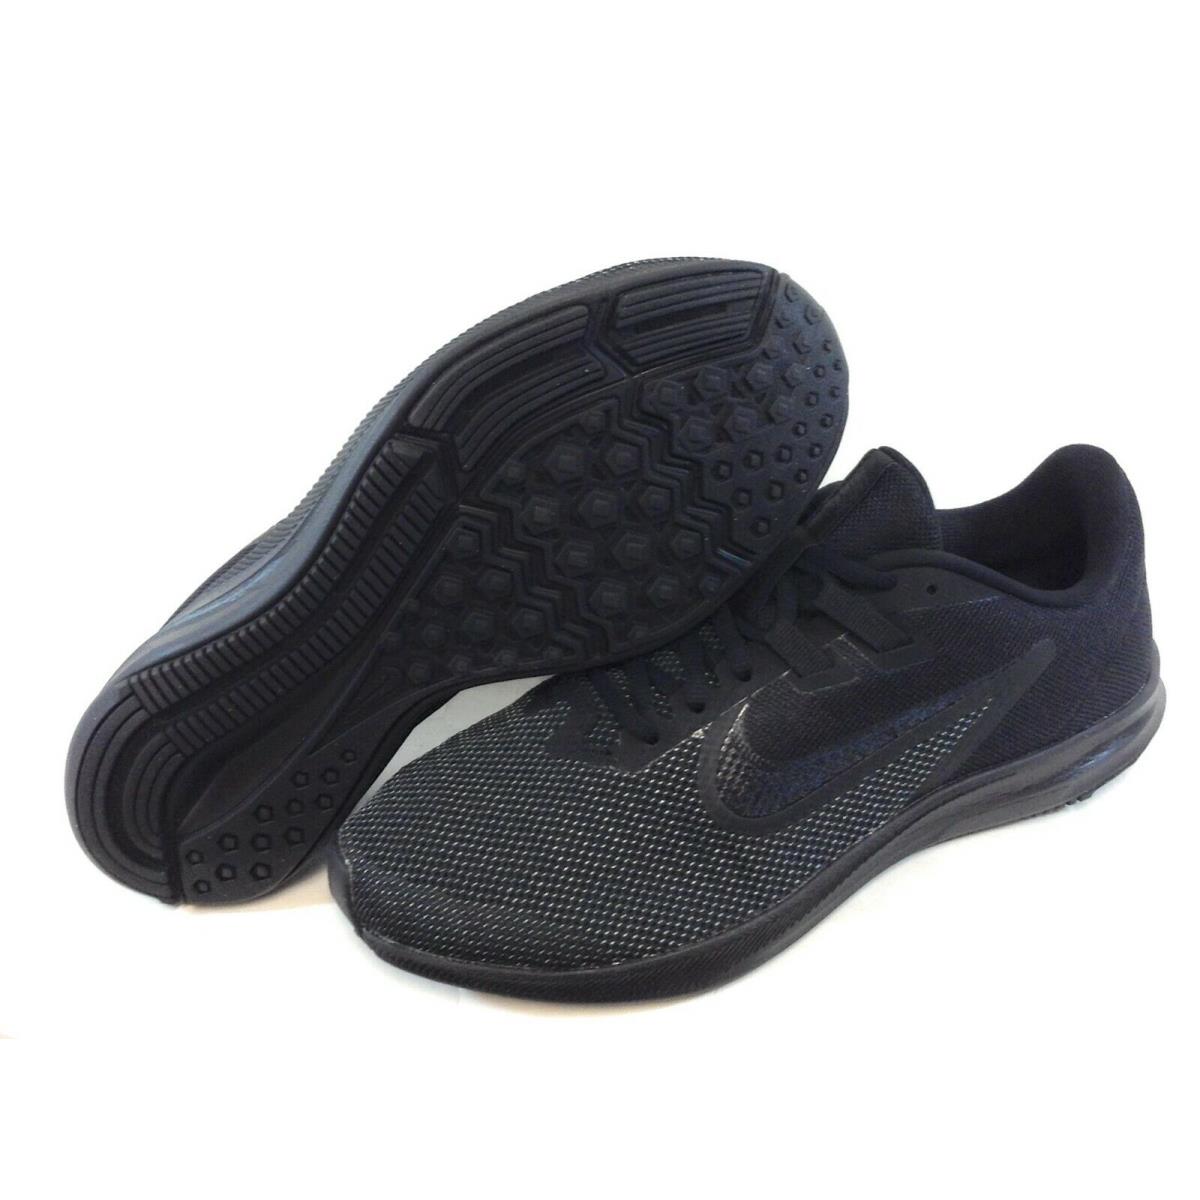 Mens Nike Downshifter 9 AR4946 002 Extra Wide Width 4E Black Sneakers Shoes - Black , Black Manufacturer